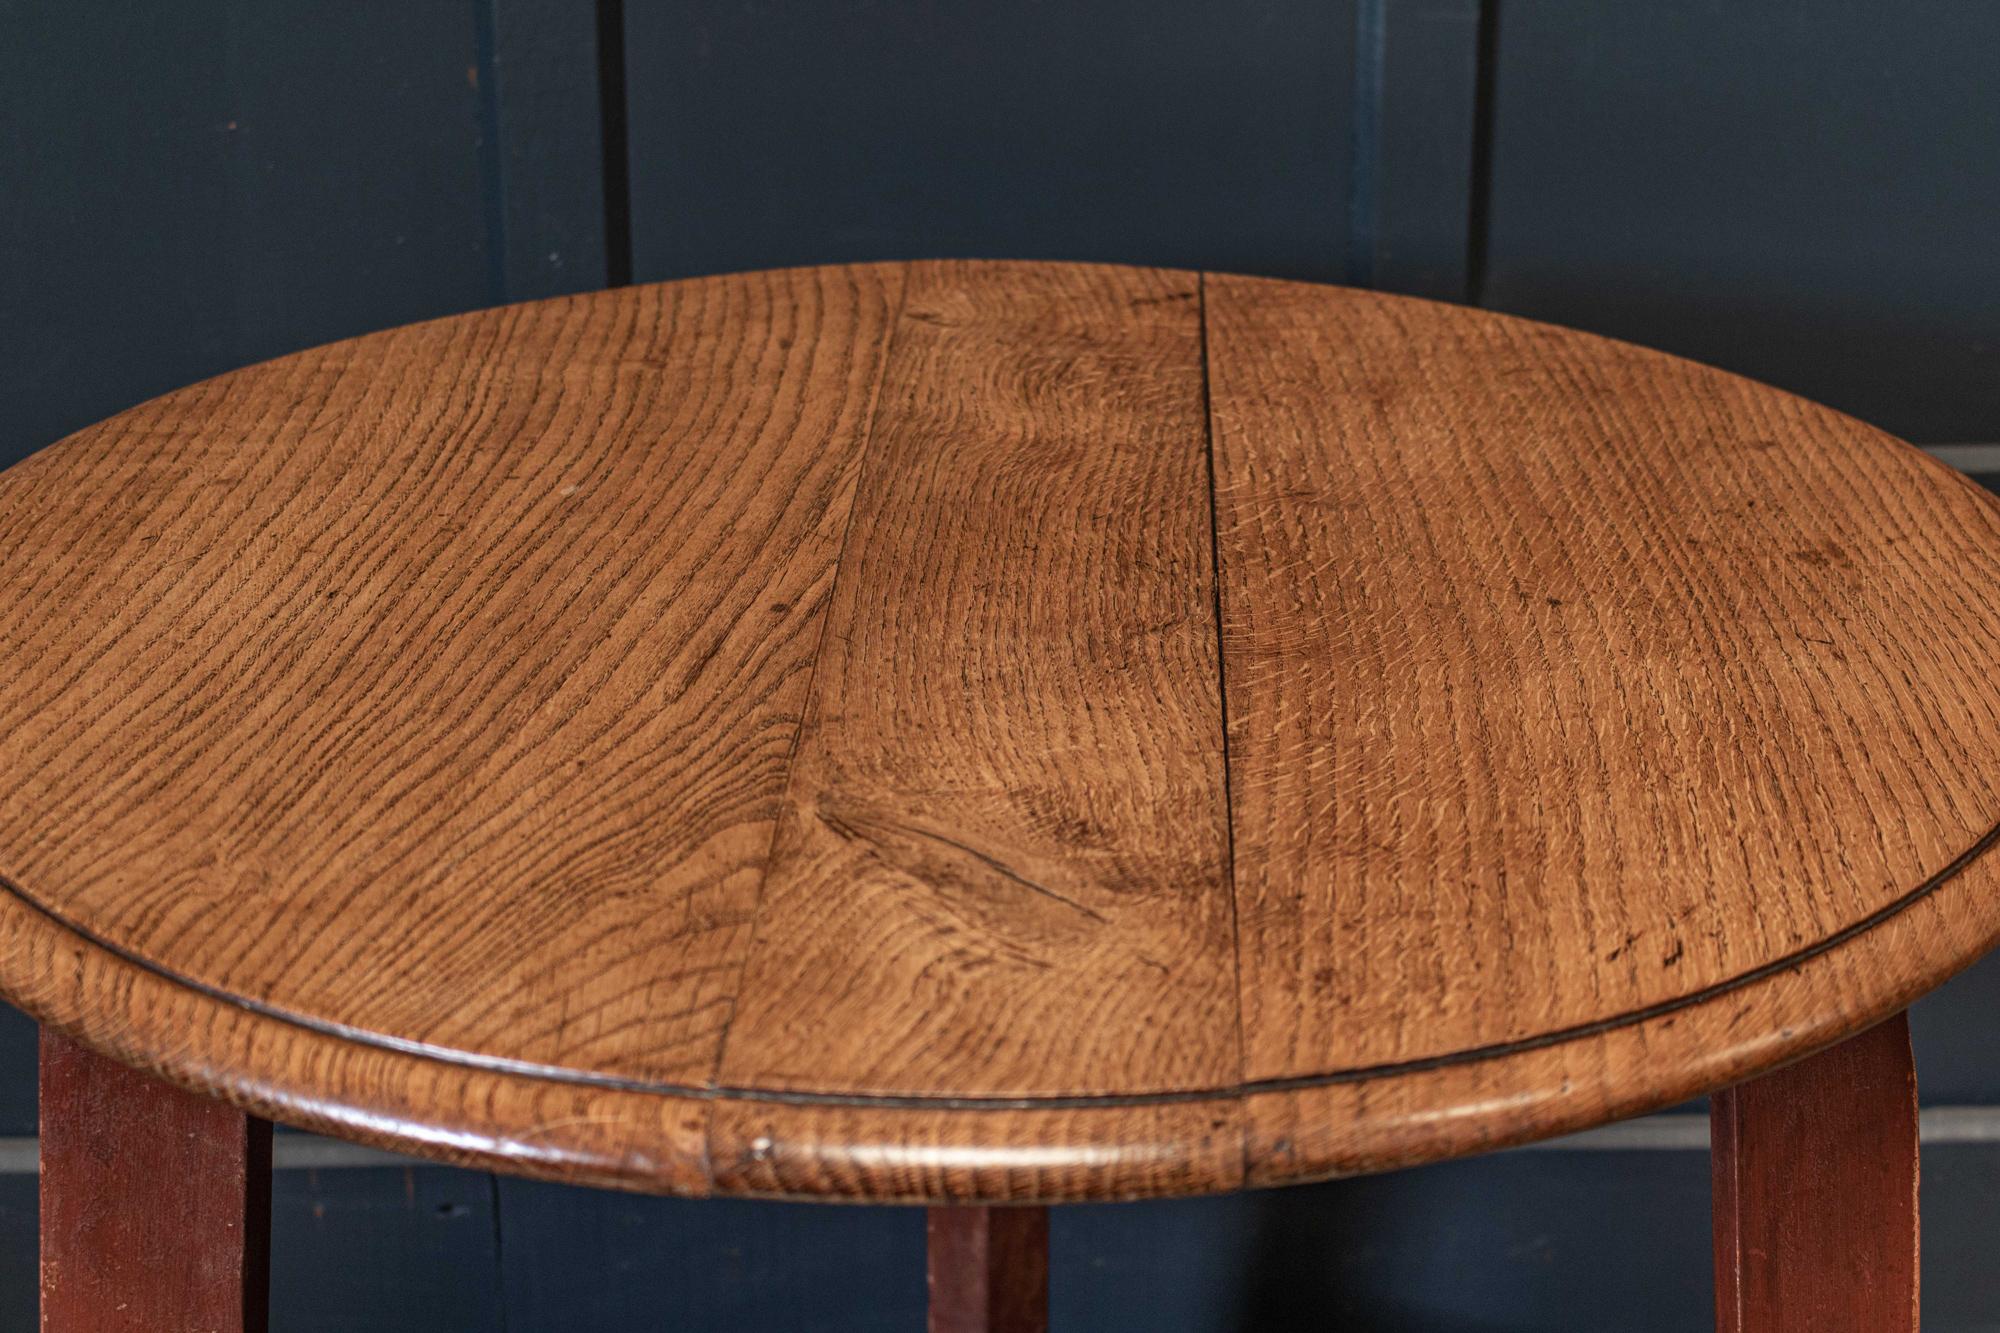 Circa 1840

19th C English ash cricket table in original painted finish.

    

Measures: Diameter 74 x height 73cm.